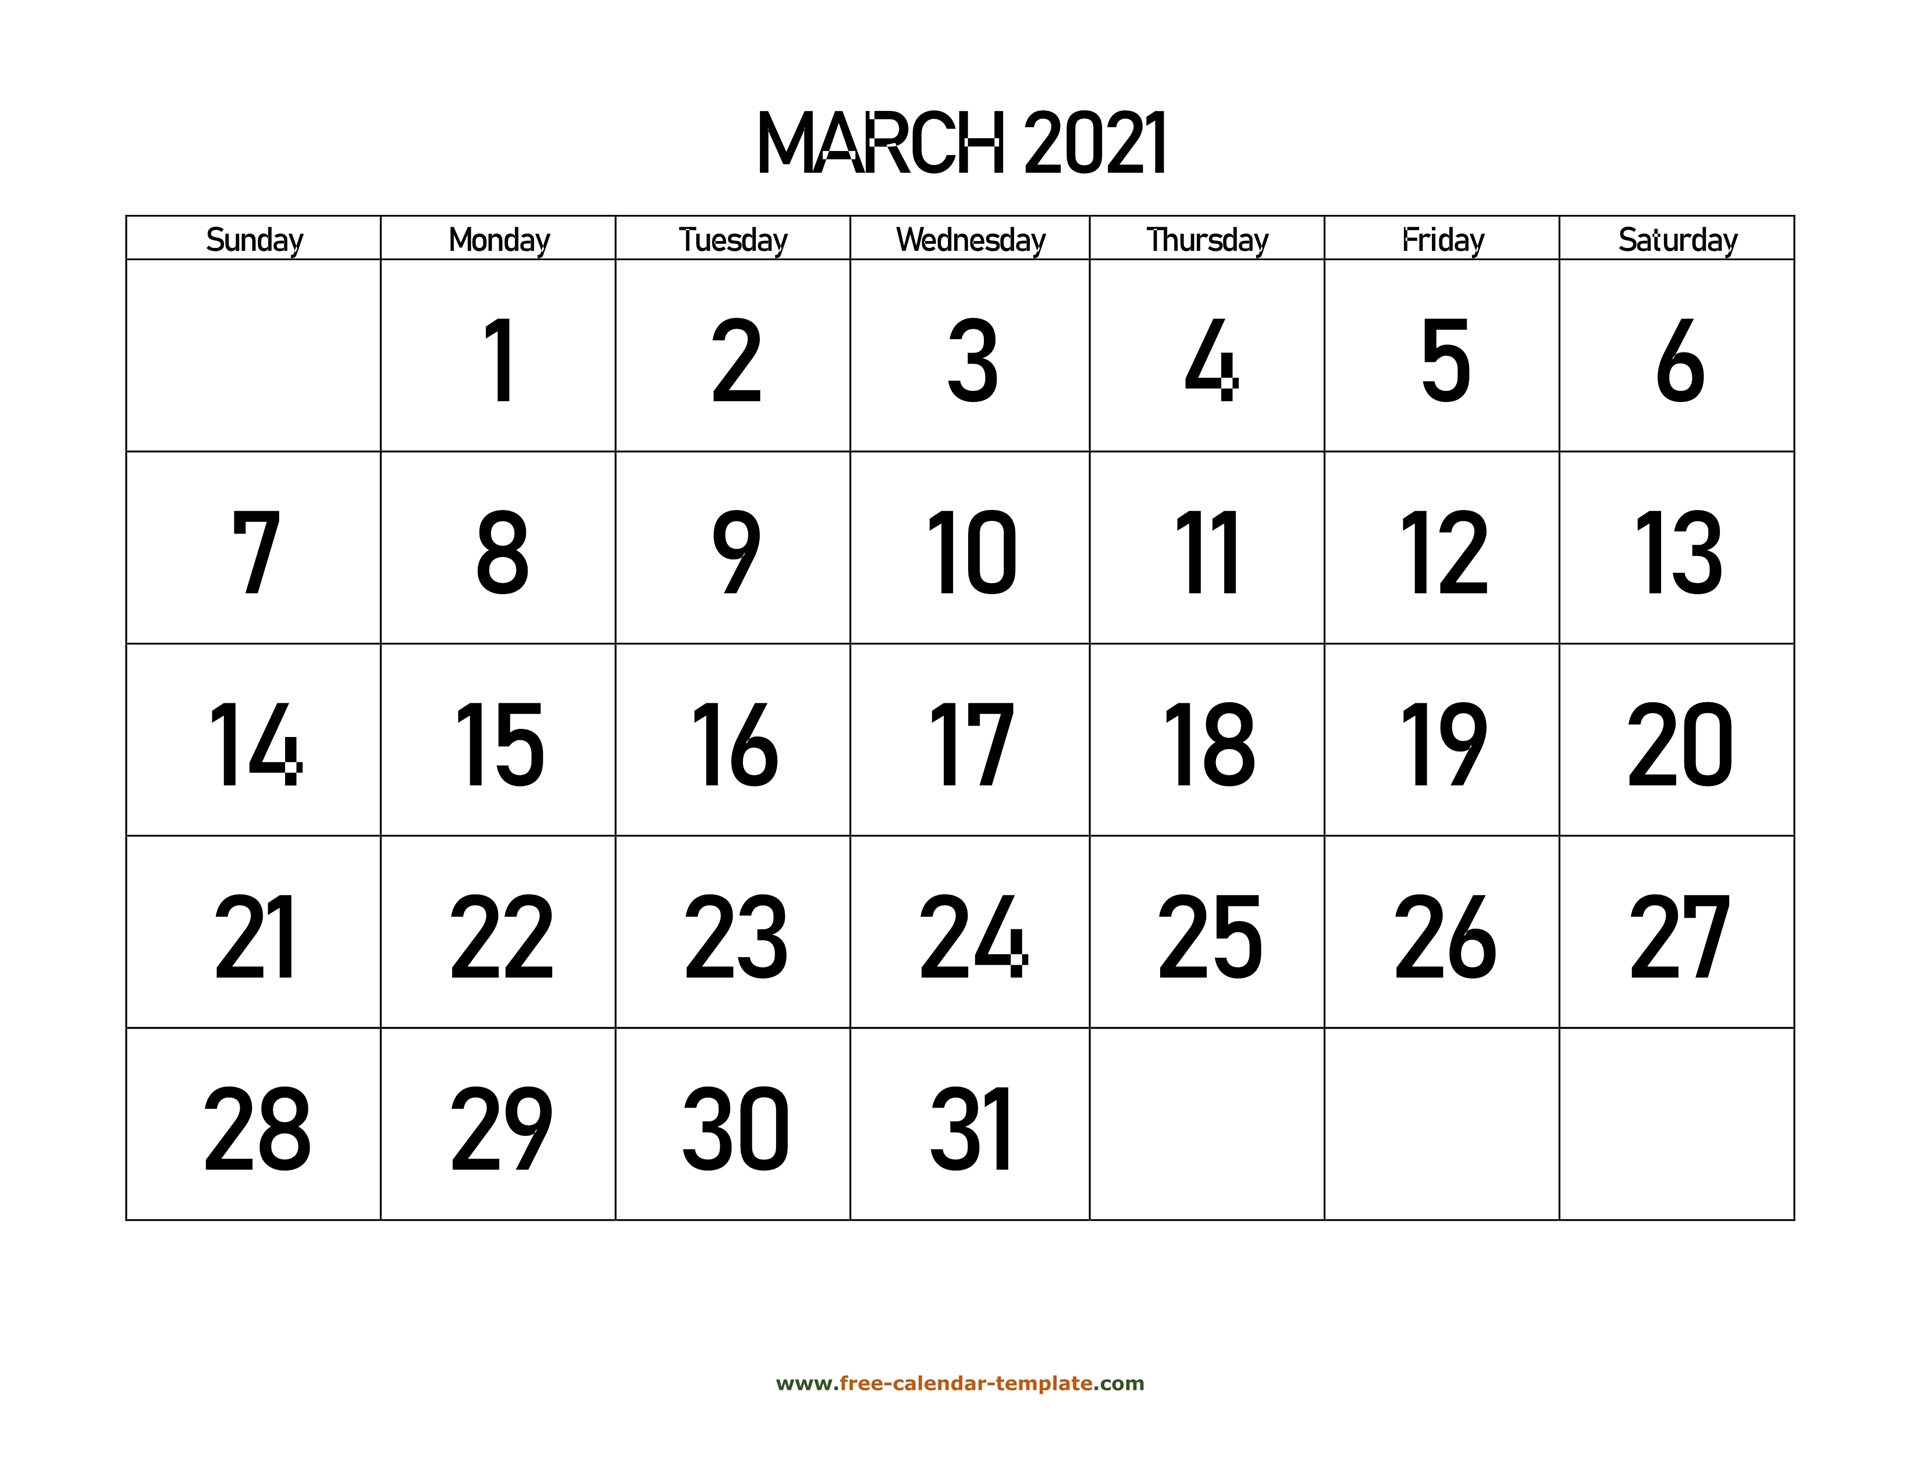 march 2021 free calendar tempplate free calendar template com